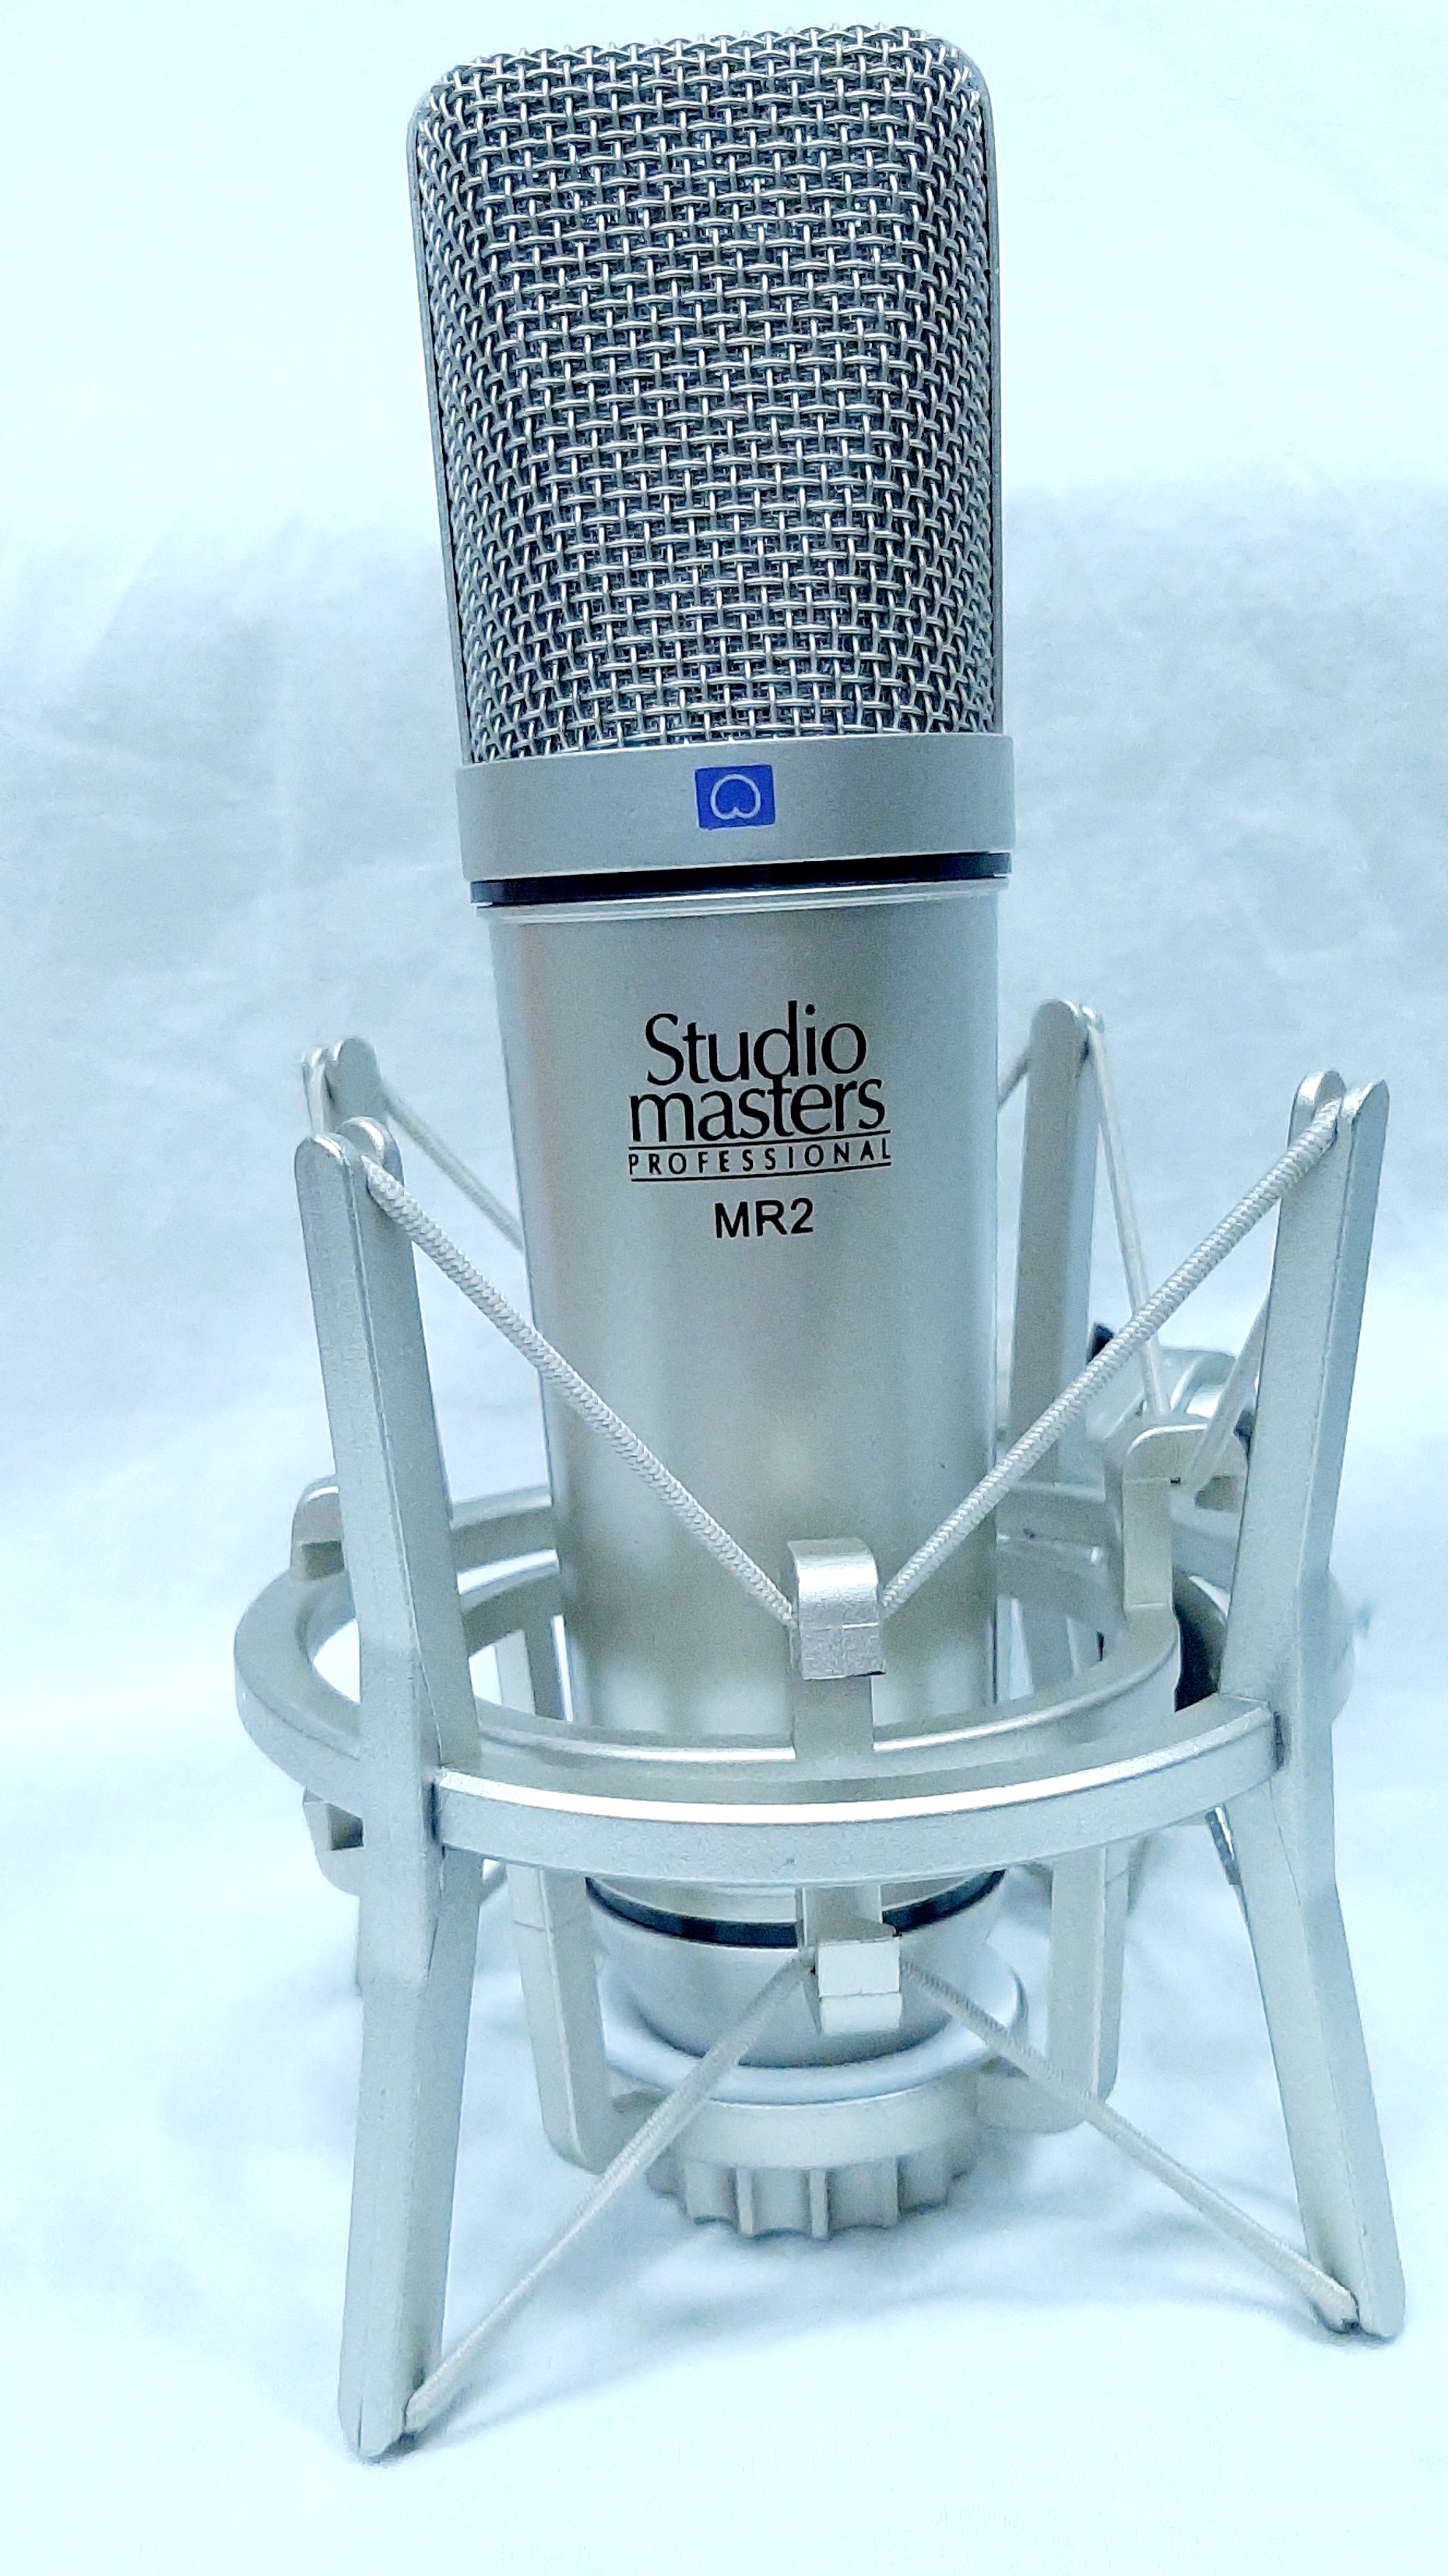 Studiomasters MR-2